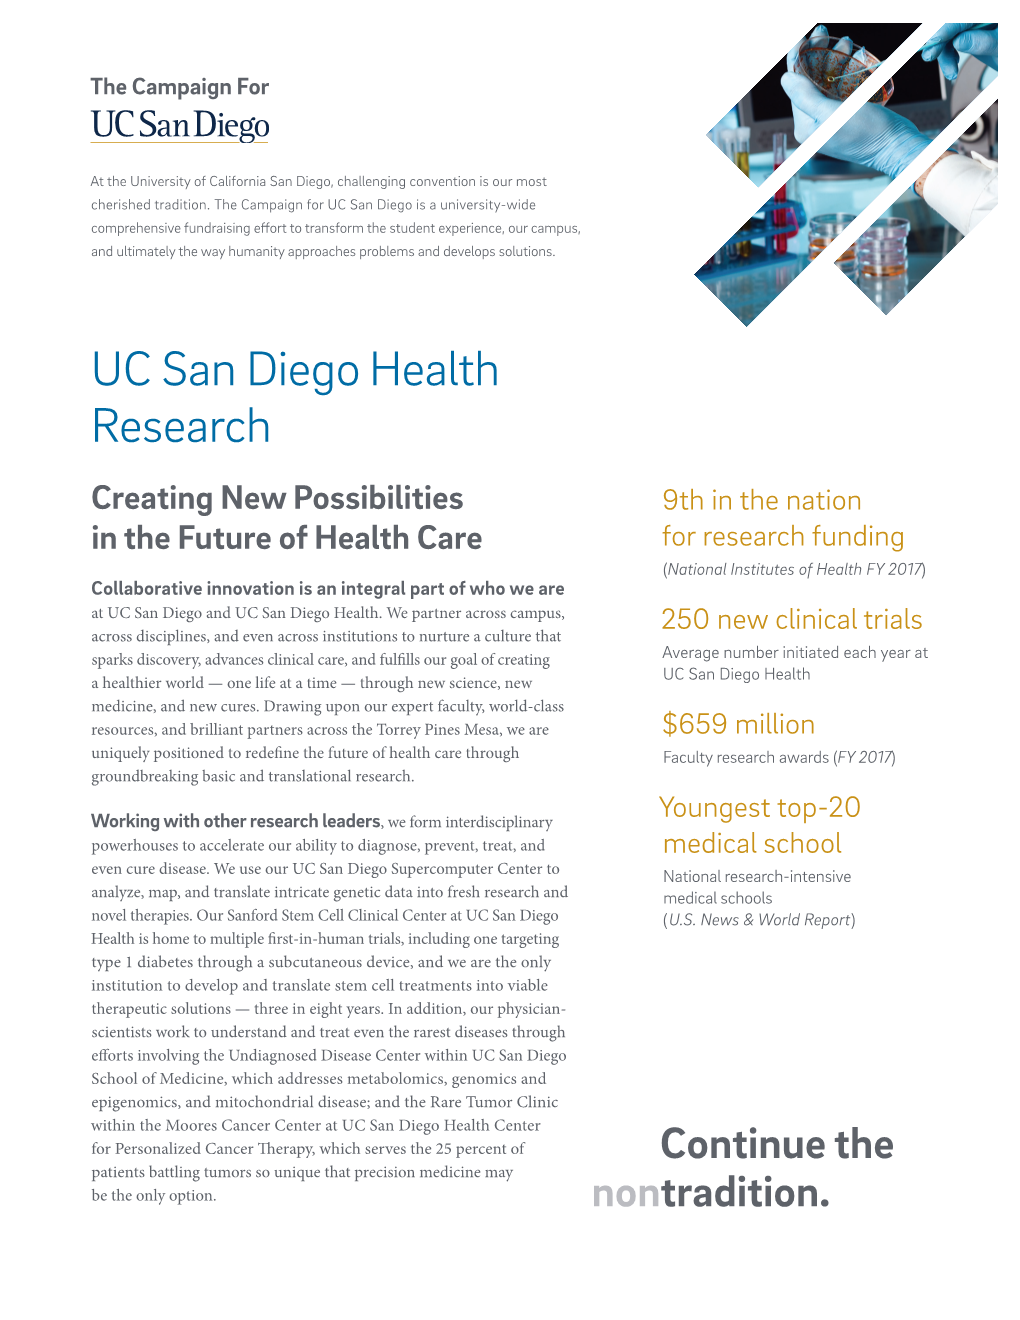 UC San Diego Health Research